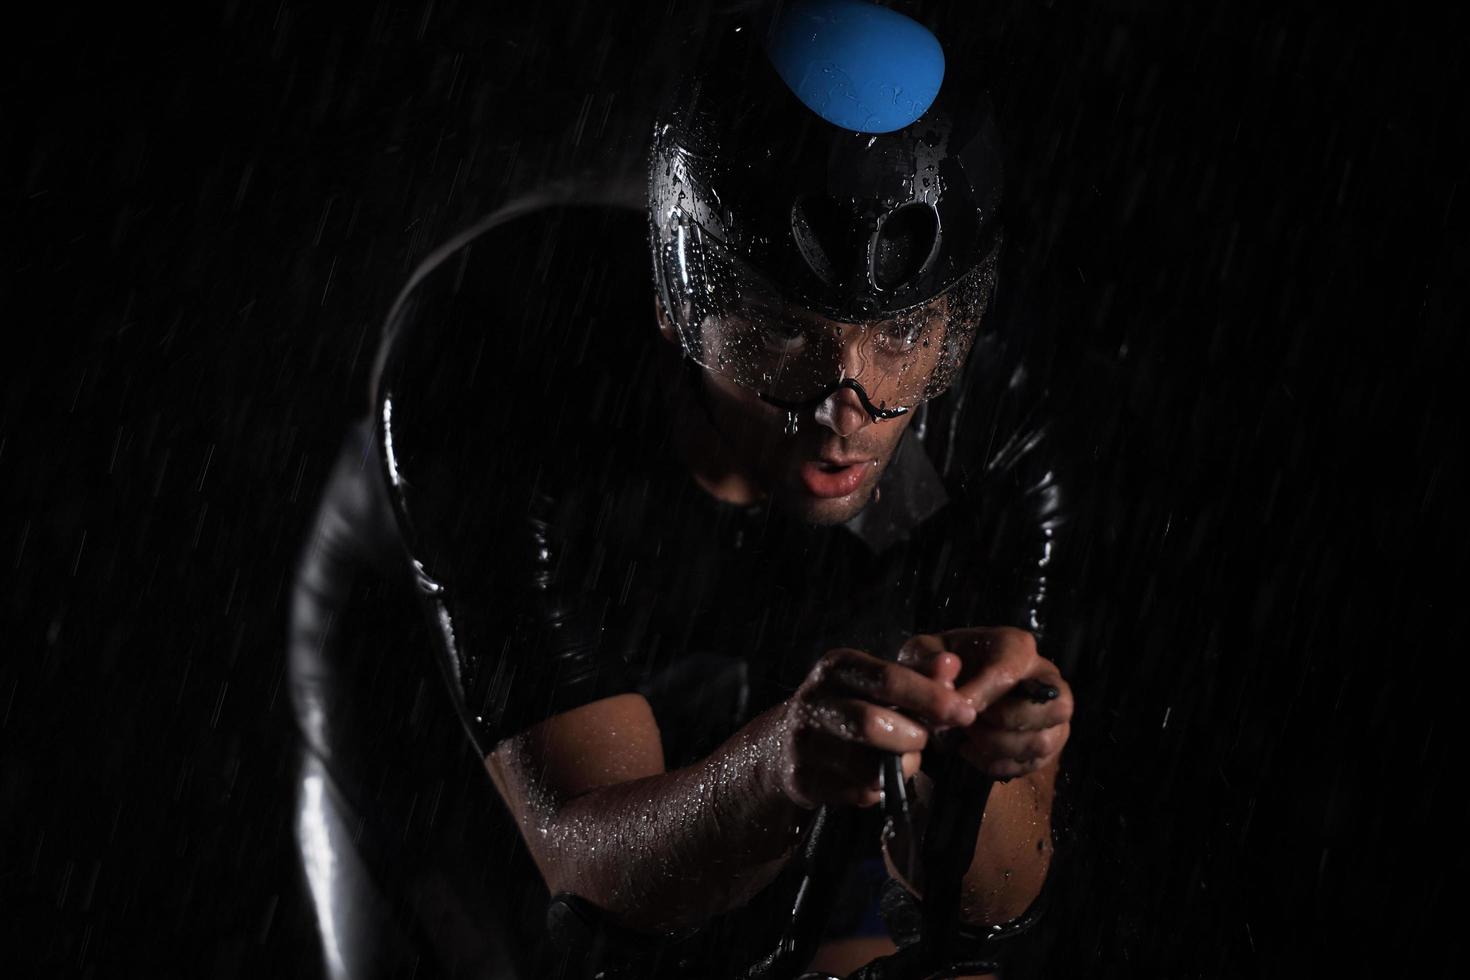 triathlon athlete riding bike  fast on rainy night photo